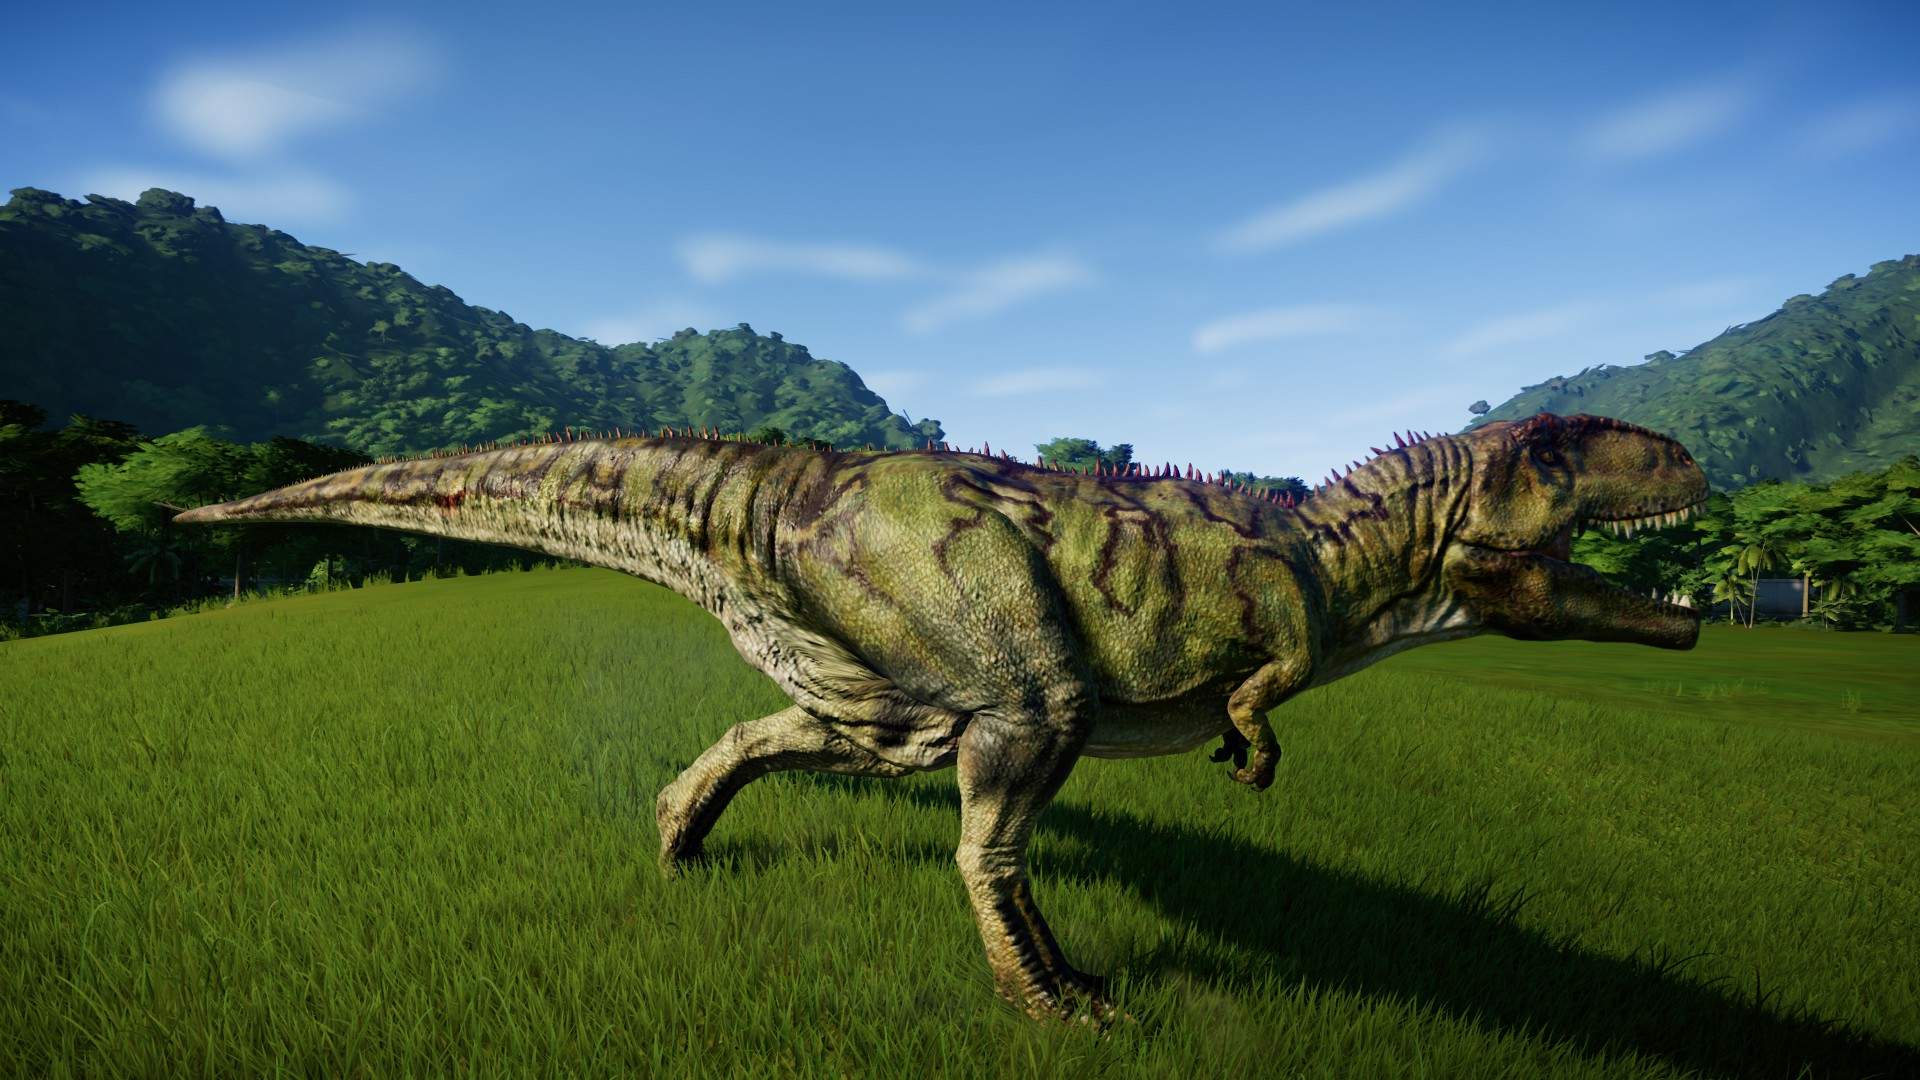 jurassic world evolution giganotosaurus